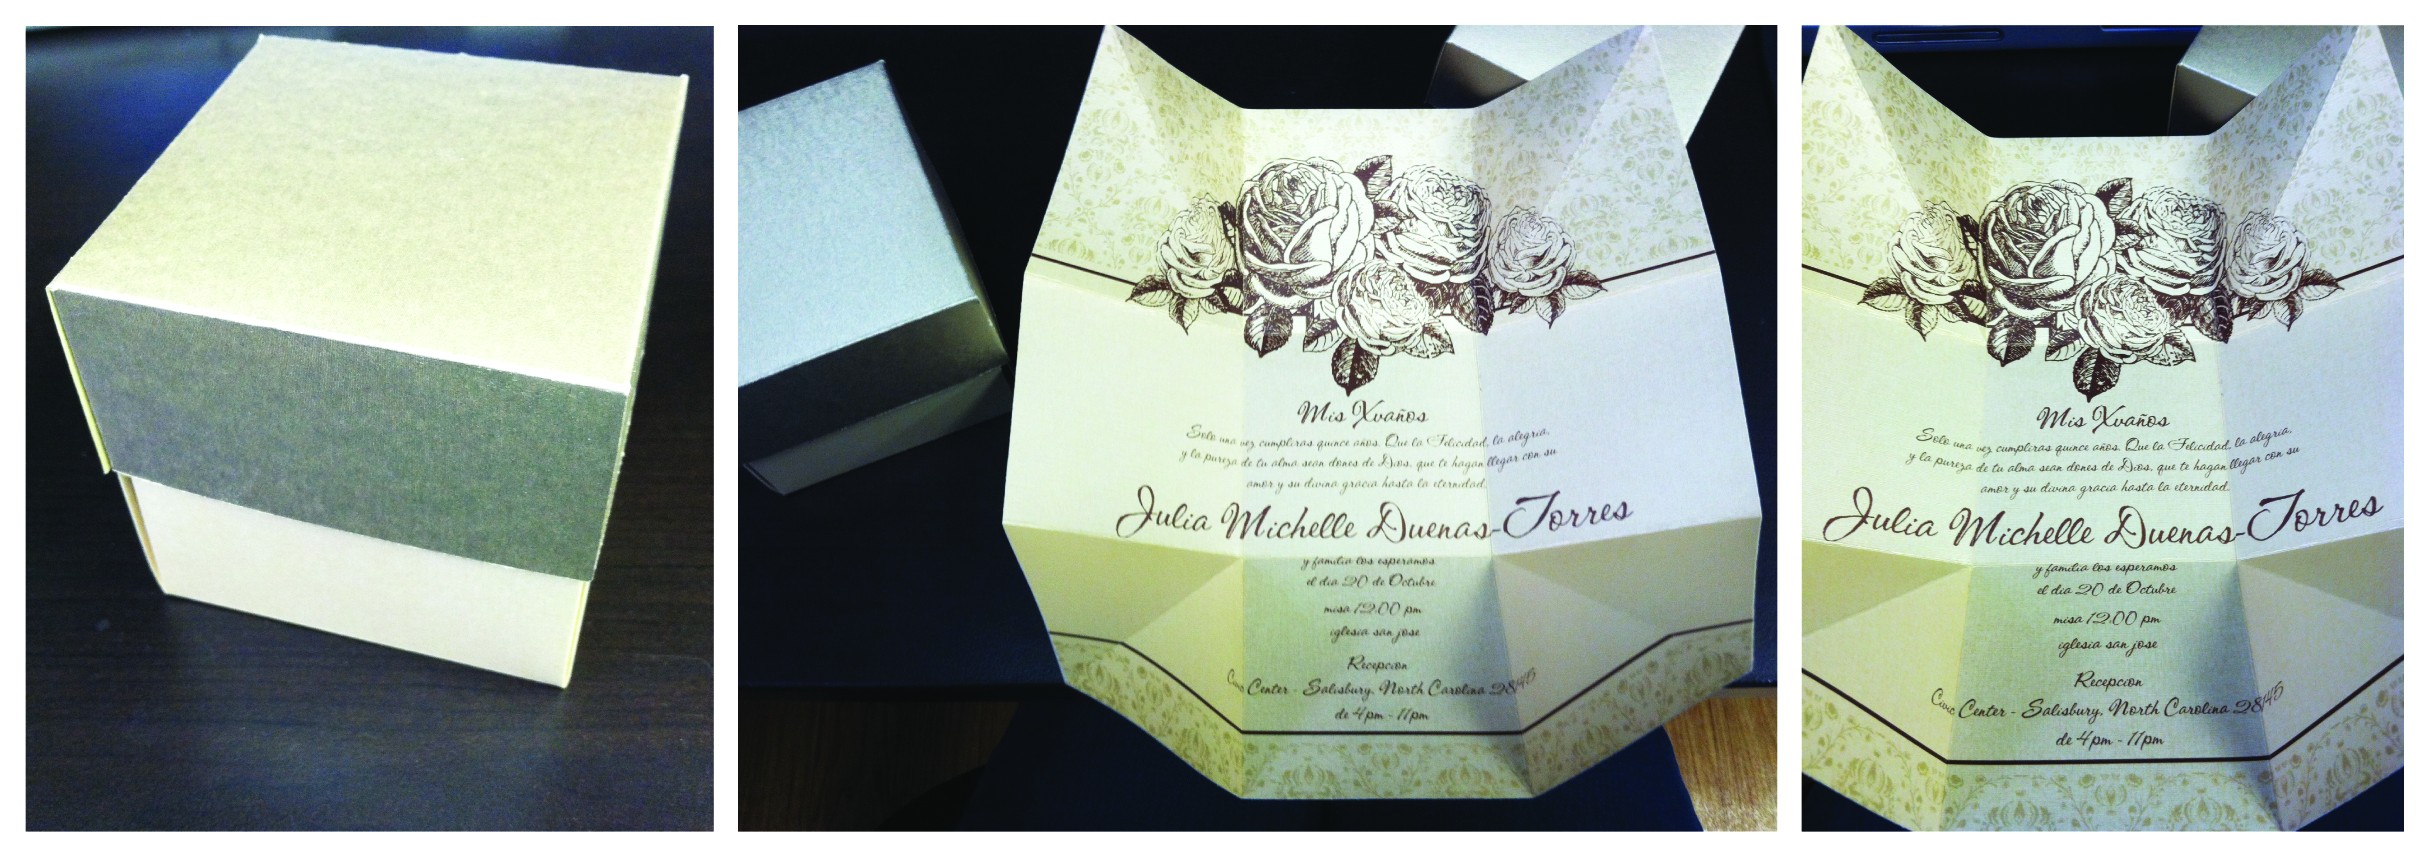 quinceanera box invitations